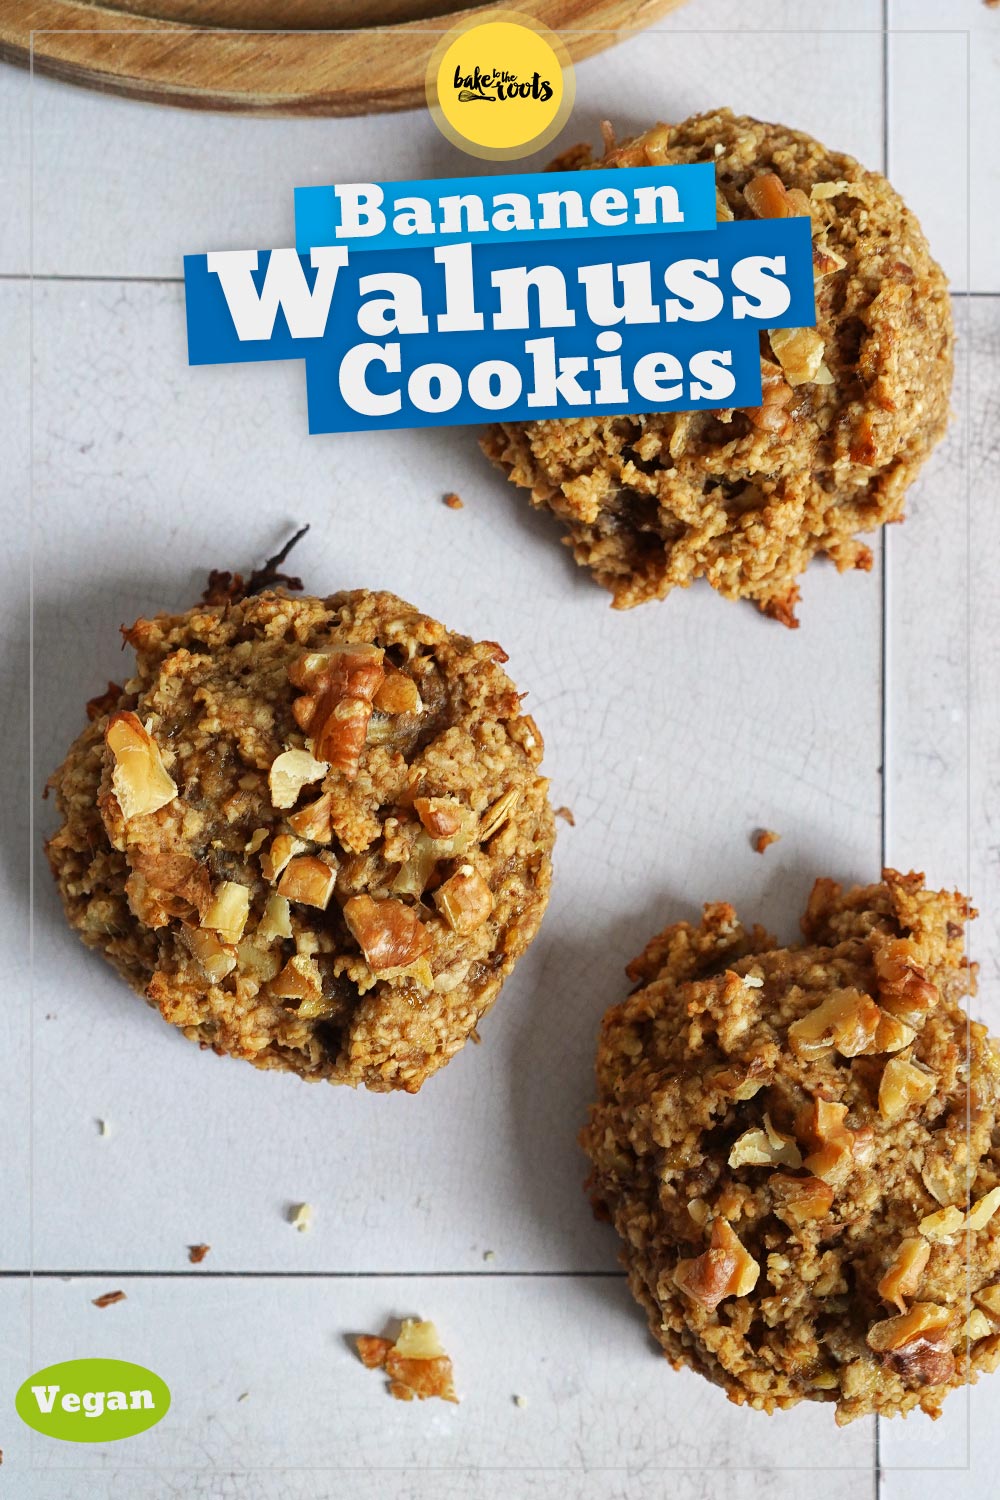 Bananen, Walnuss & Haferflocken Cookies (vegan) | Bake to the roots